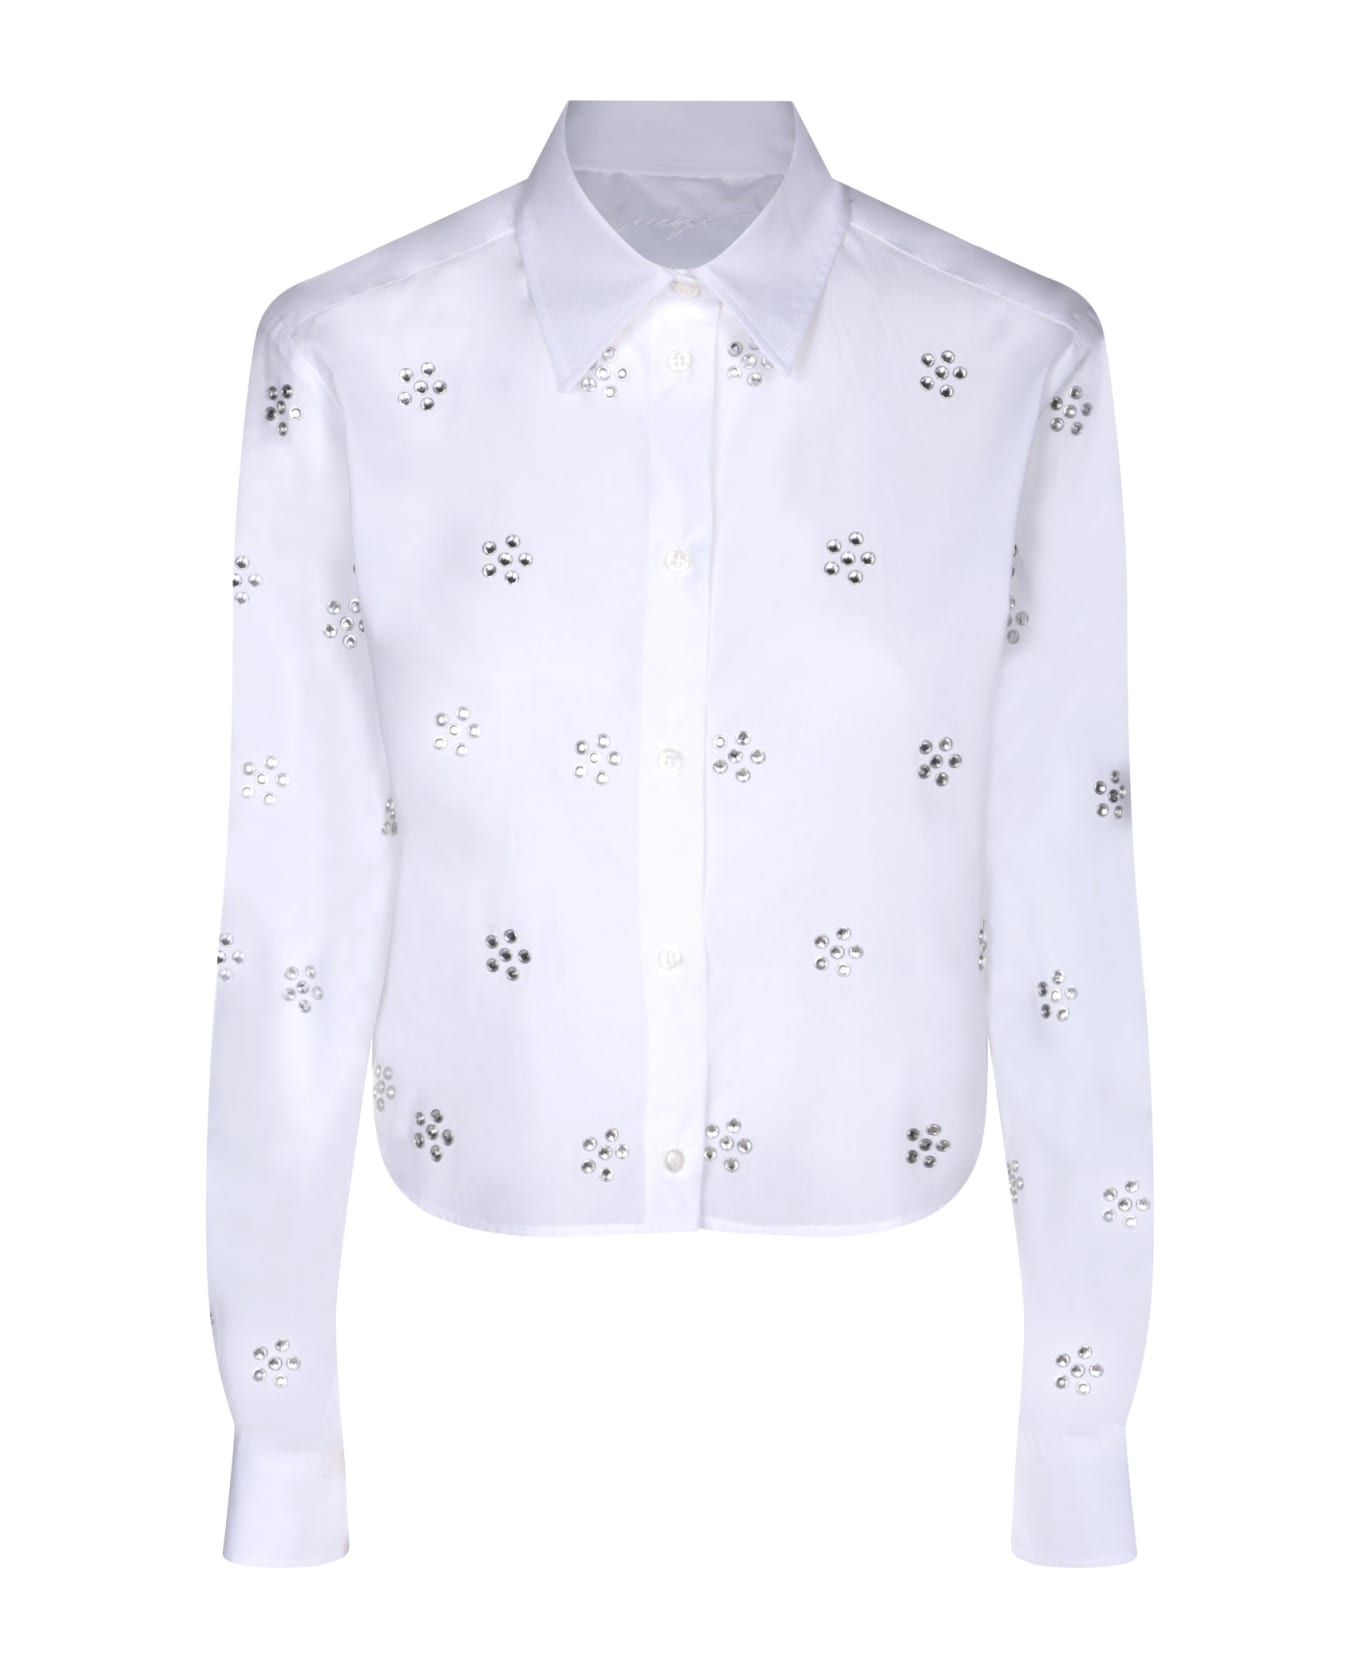 MSGM Rhinestone Patch White Shirt - White シャツ